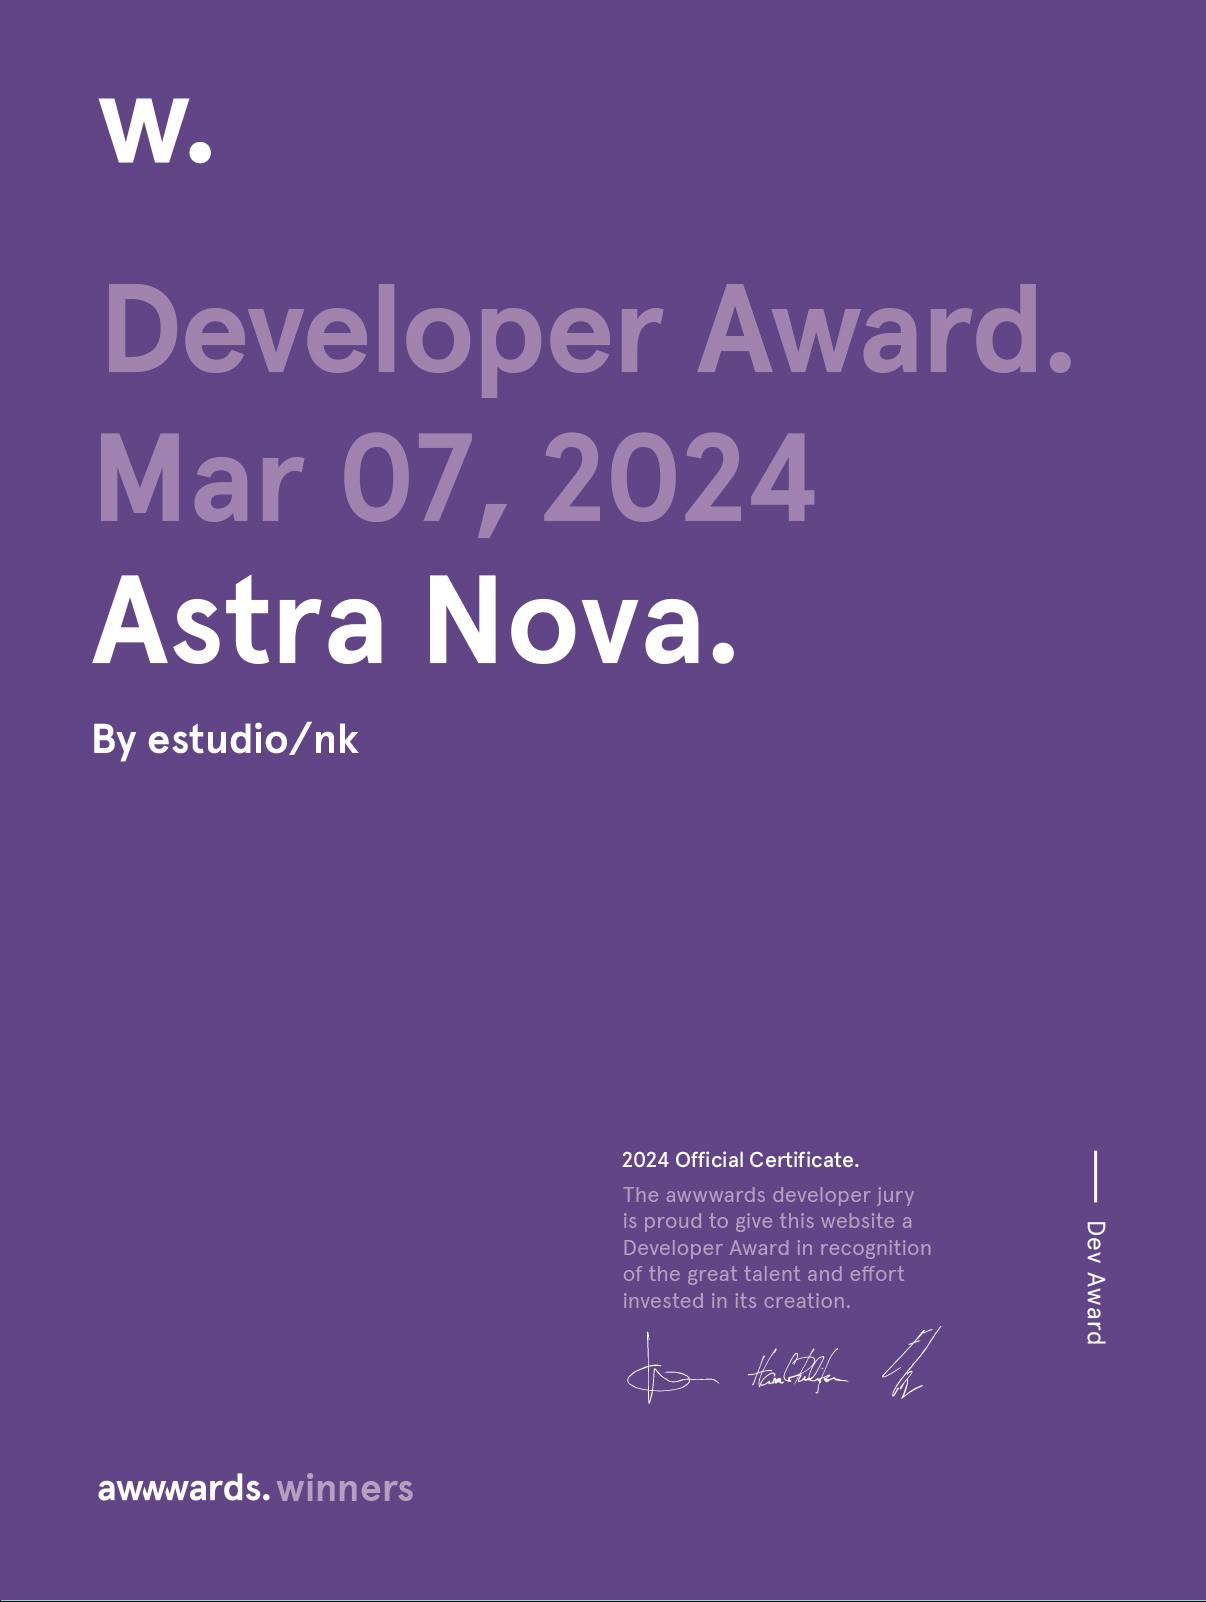 Developer Award Awwwards